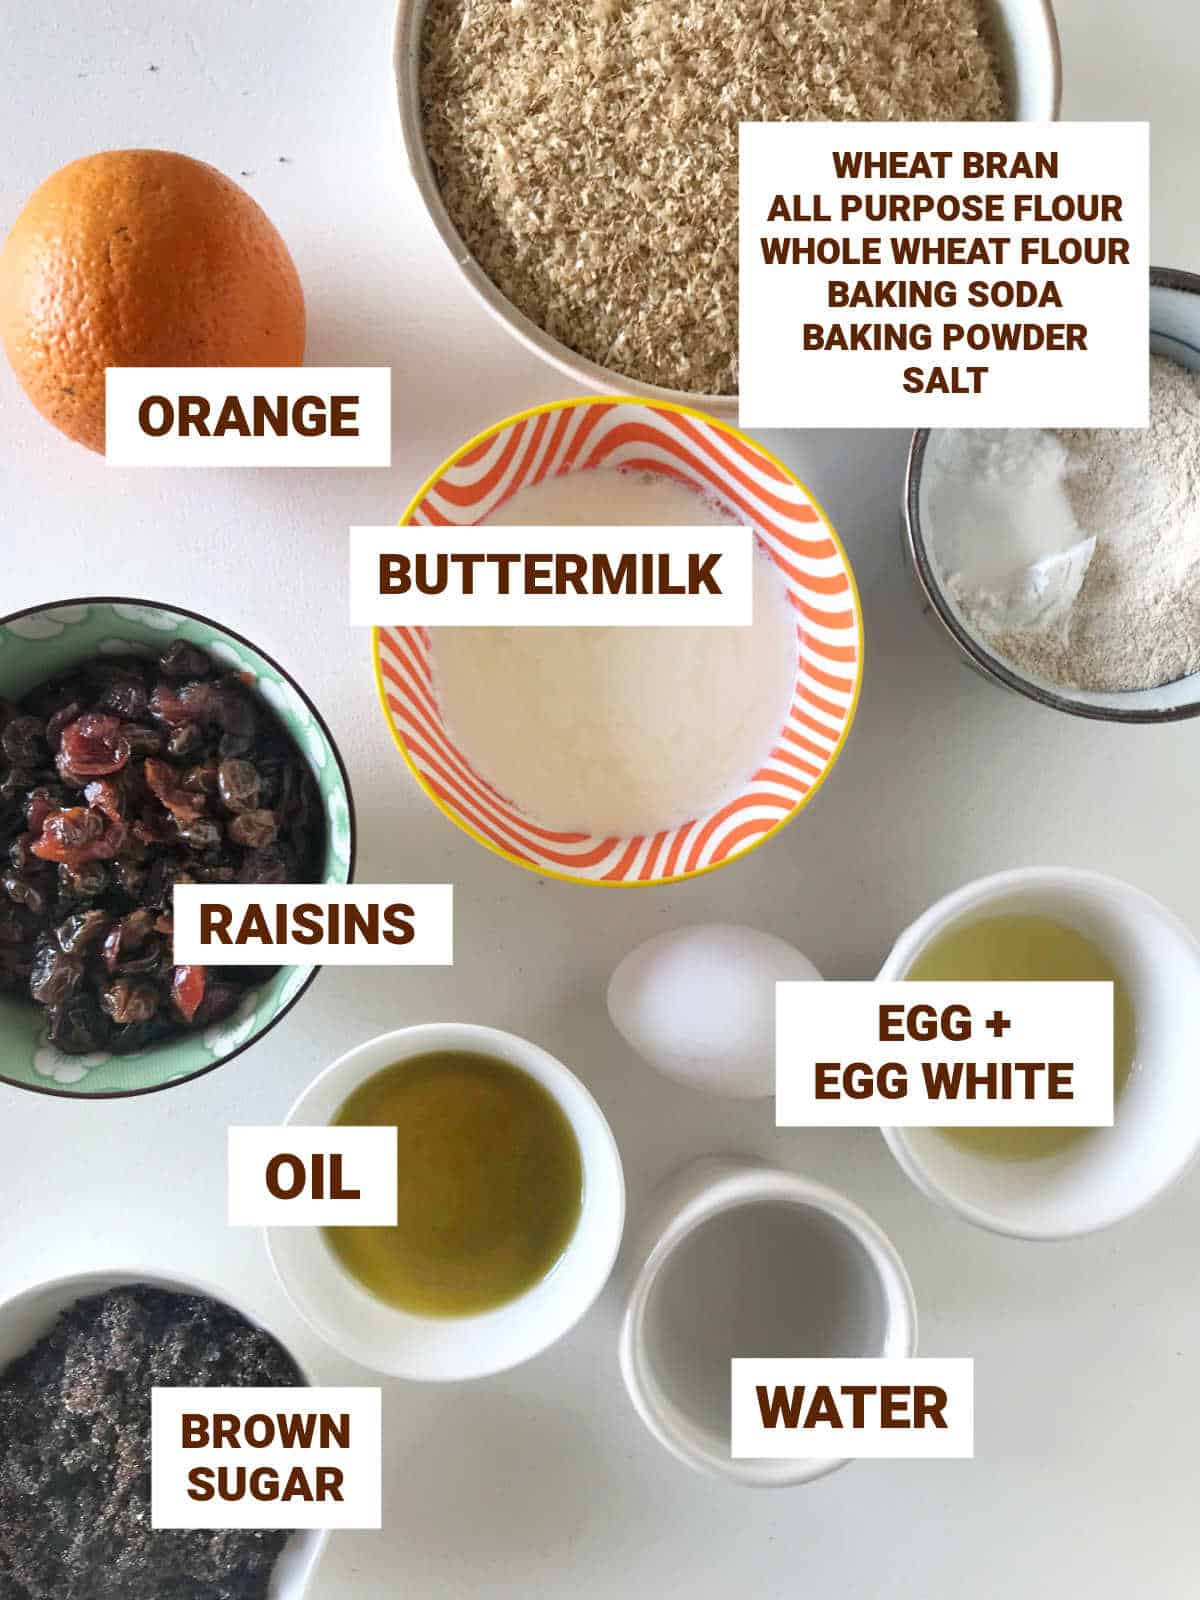 Raisin bran muffin ingredients in bowls on white surface including orange, buttermilk, oil, brown sugar, egg